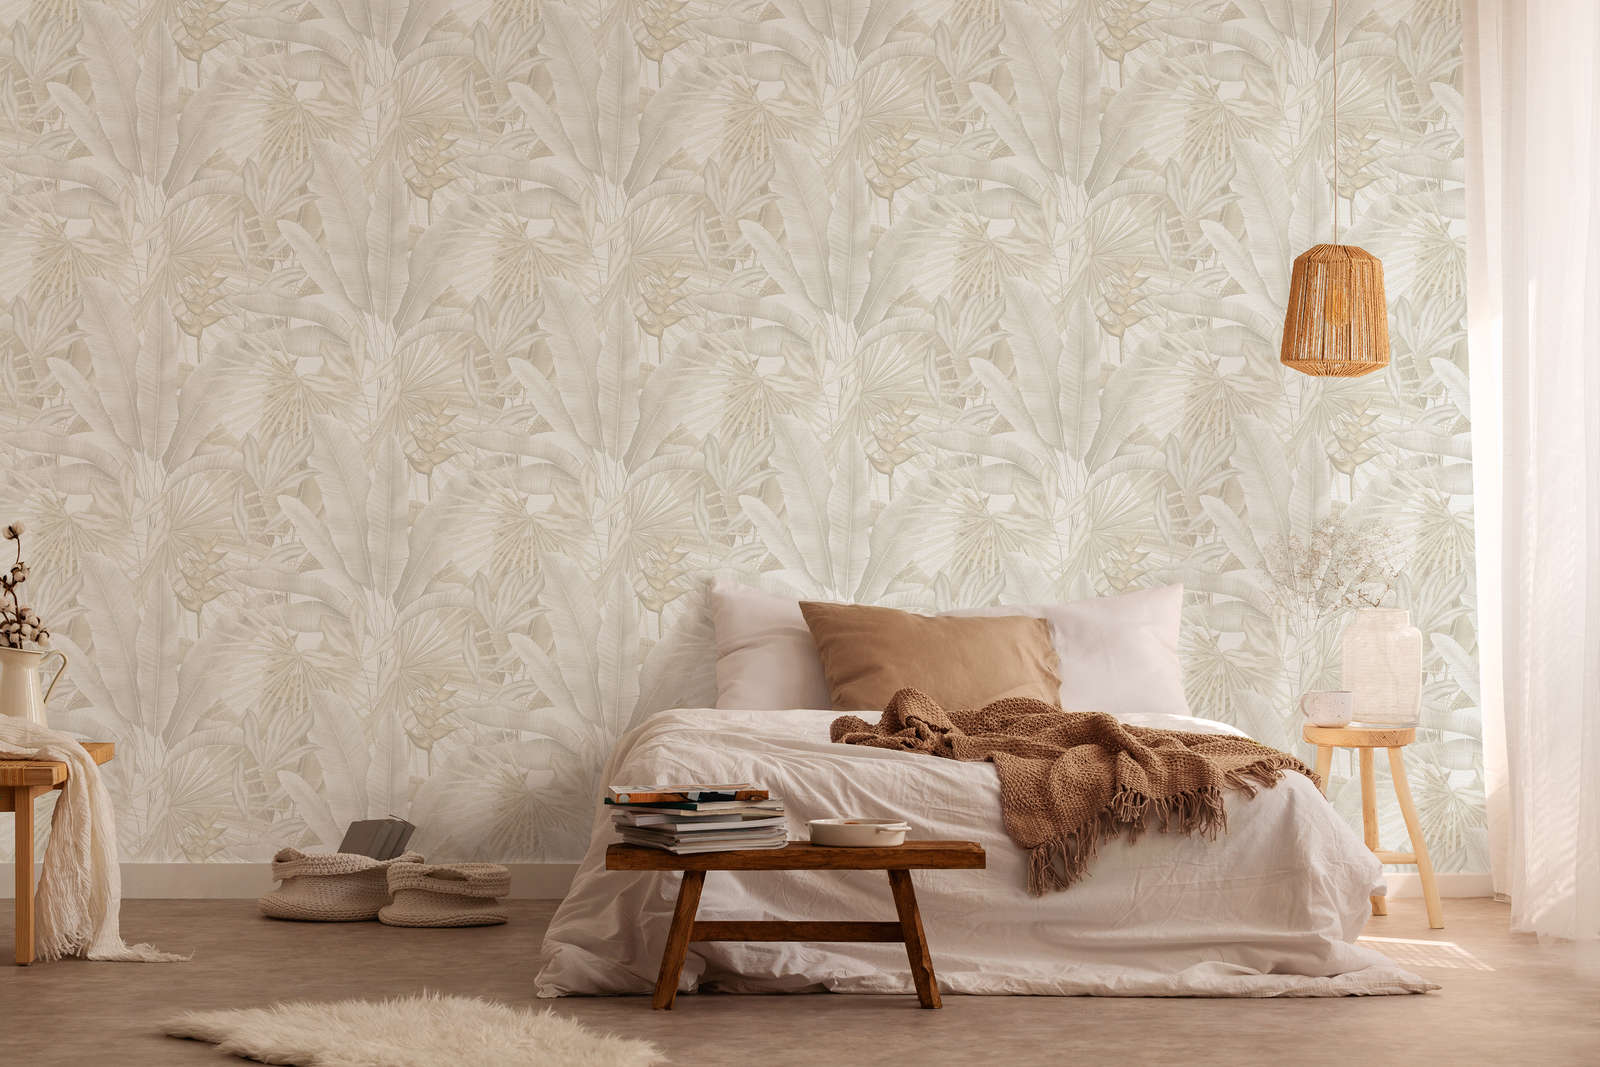             Jungle wallpaper in soft colours - beige, cream, grey
        